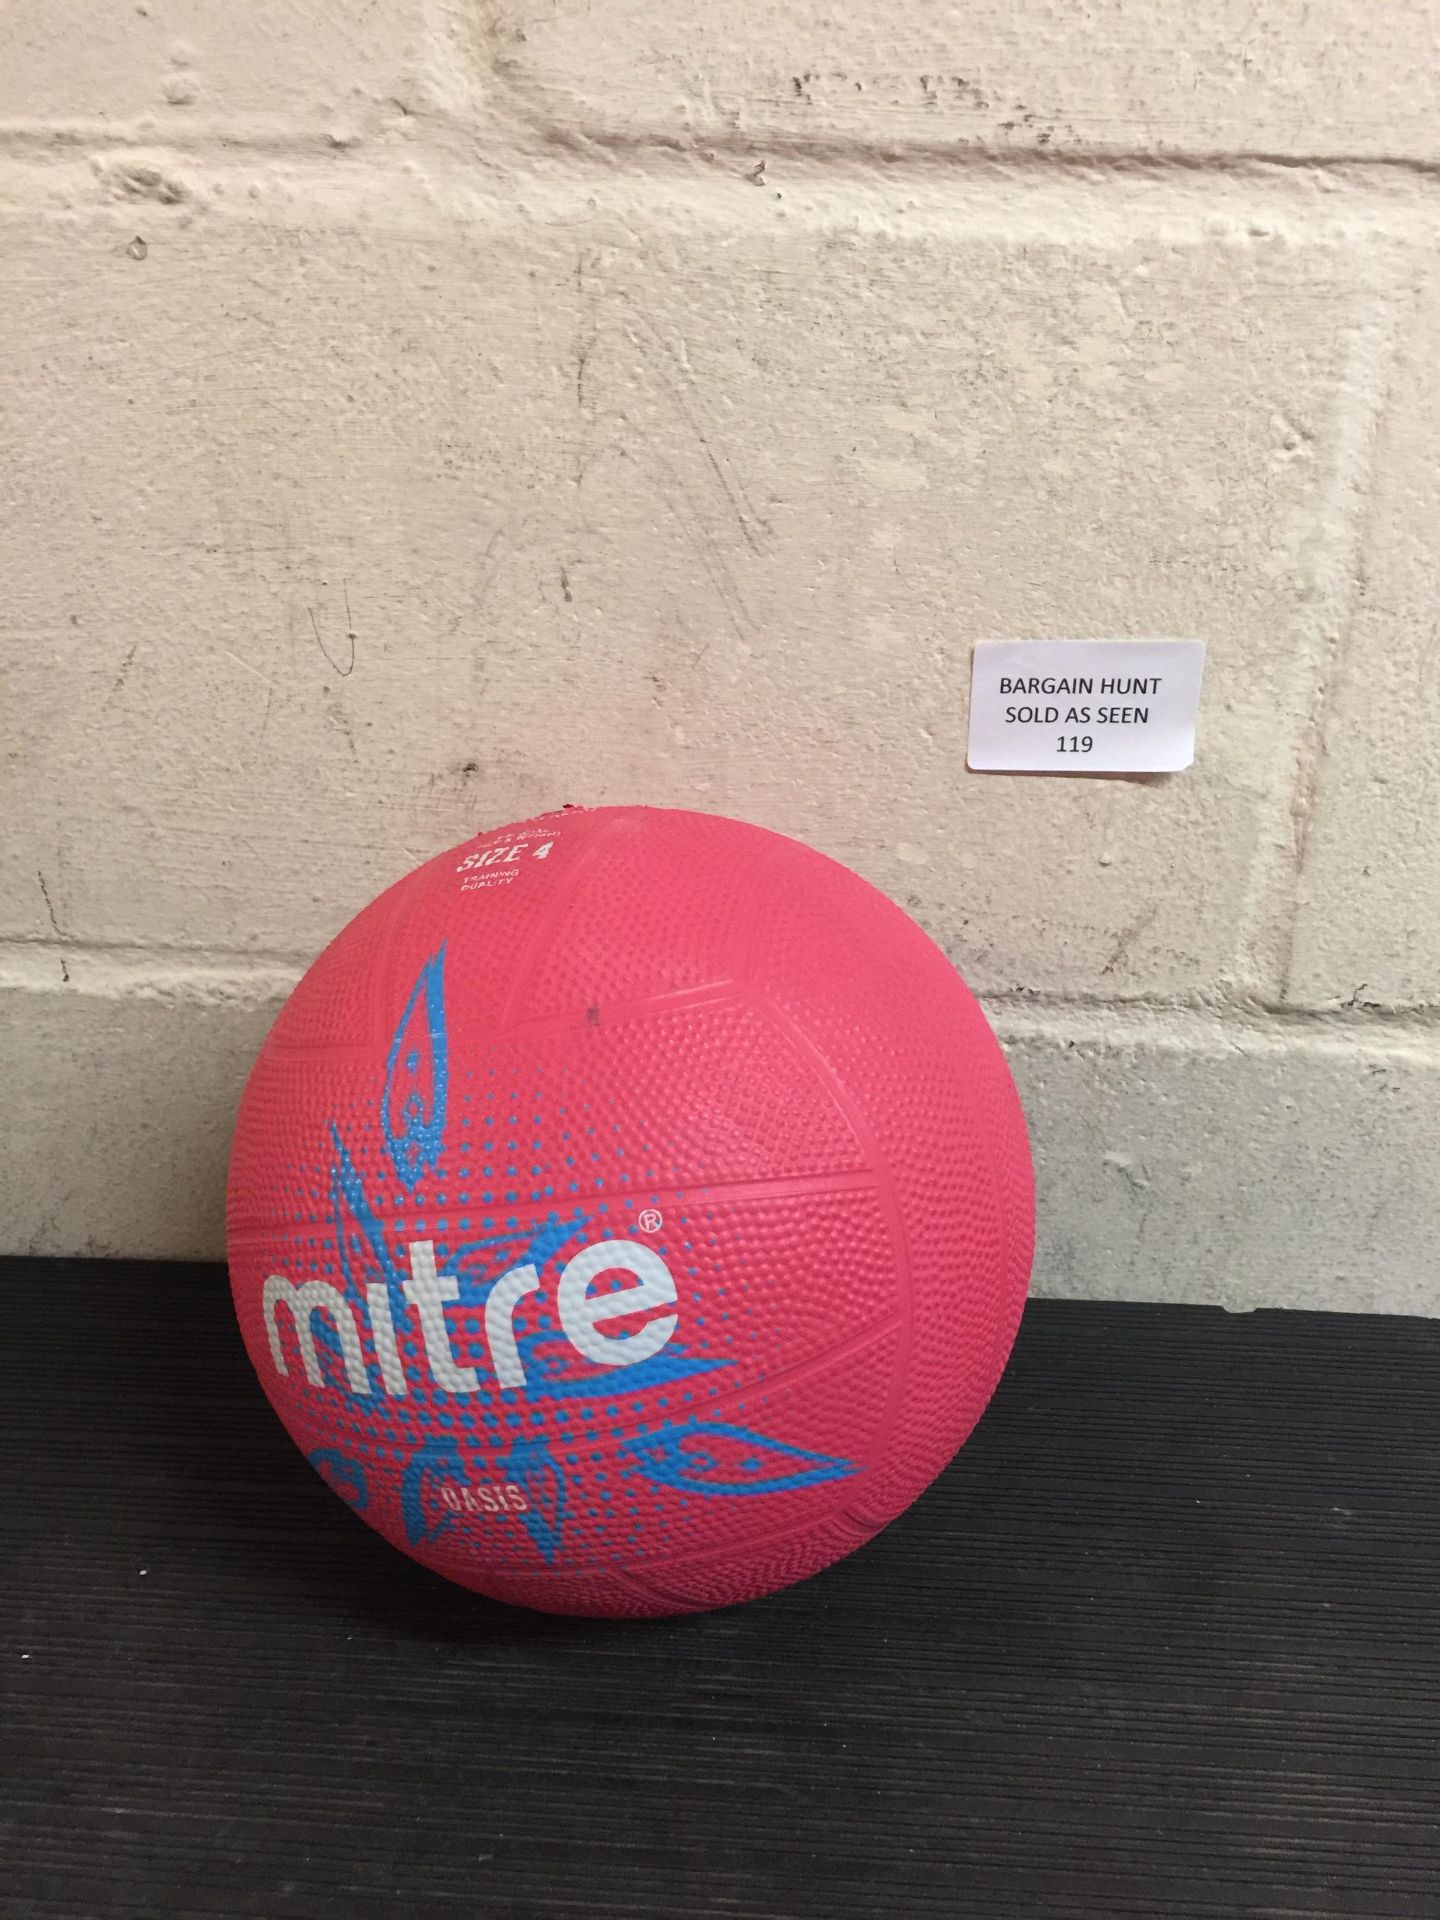 Mitre Oasis Training Netball